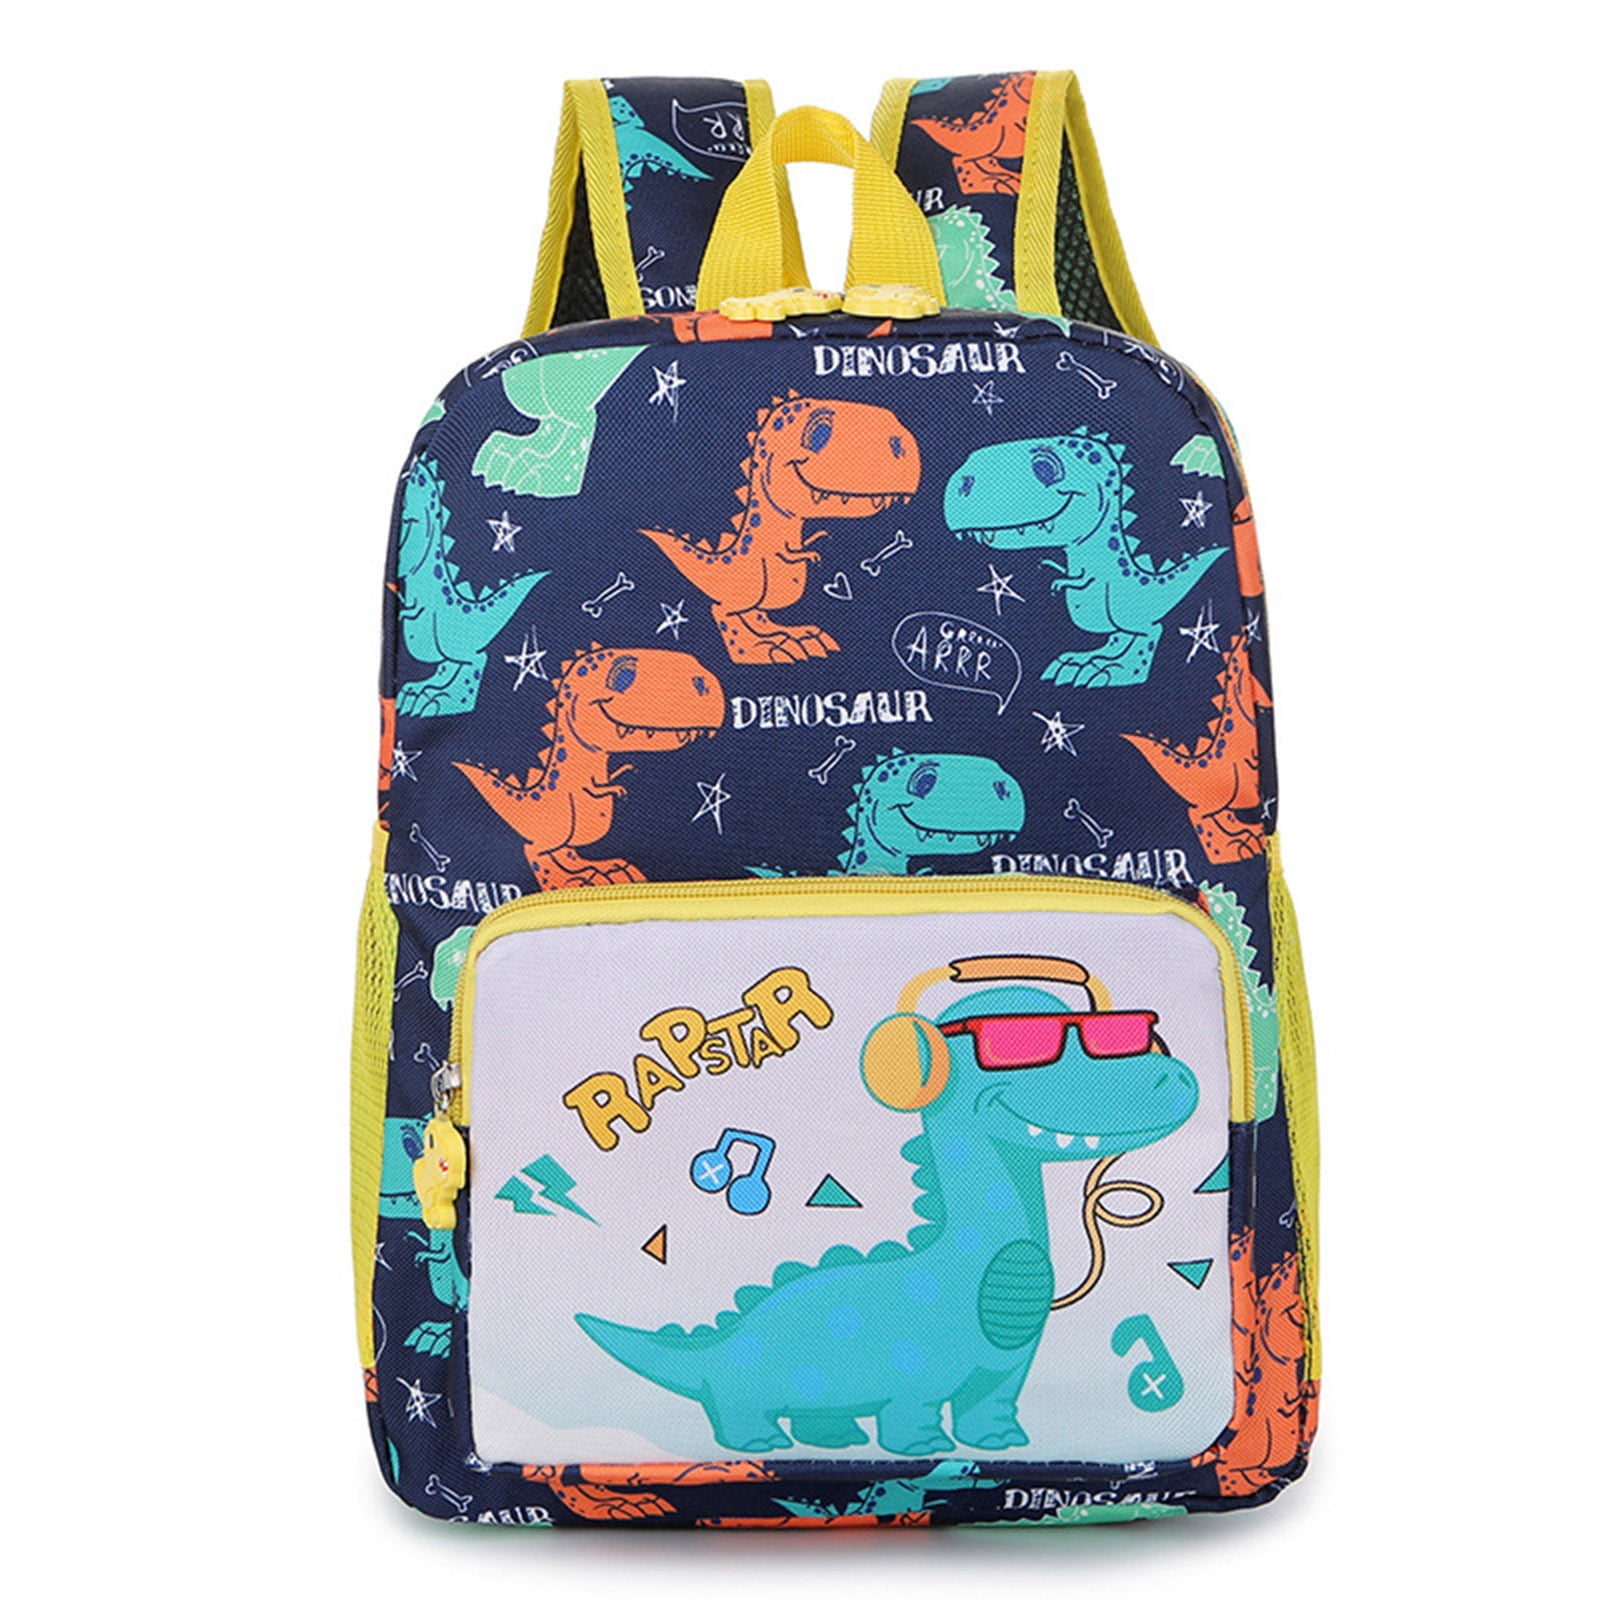 Travel Hiking School JFIDSJ 16-inch Schoolbag Orthopedic Backpack Childrens School boy Cartoon Schoolbag Camping 